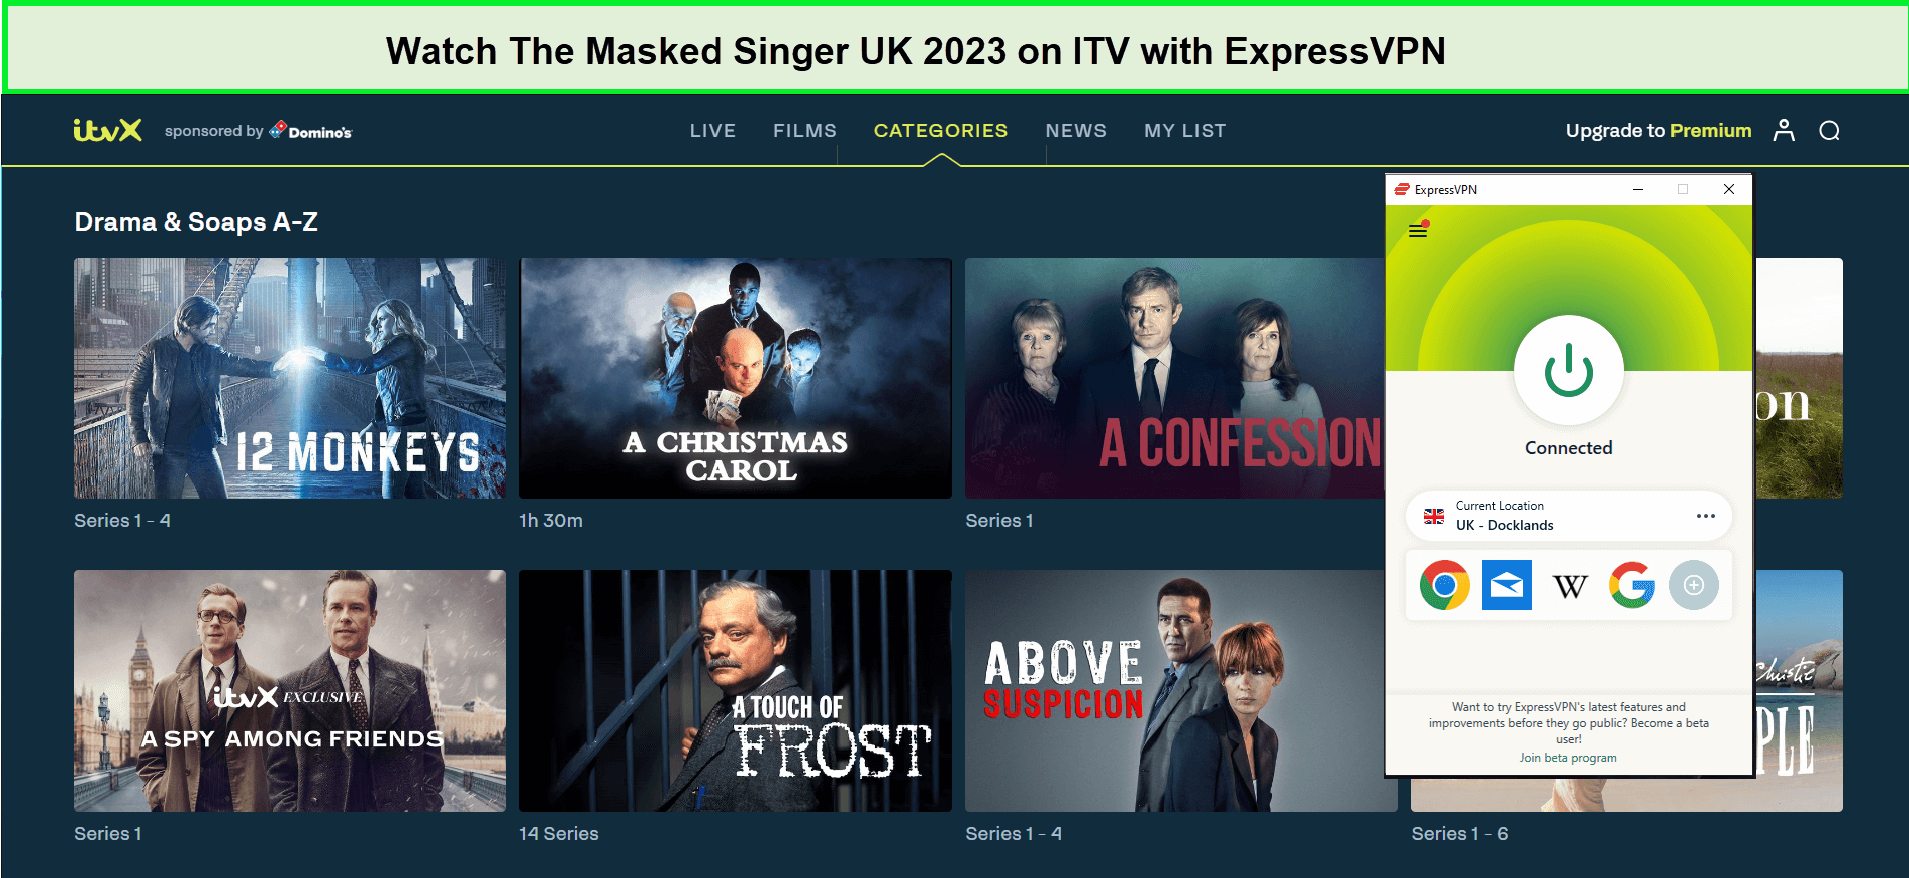 Watch-The-Masked-Singer-UK-2023-in-Australia-on-ITV-with-ExpressVPN